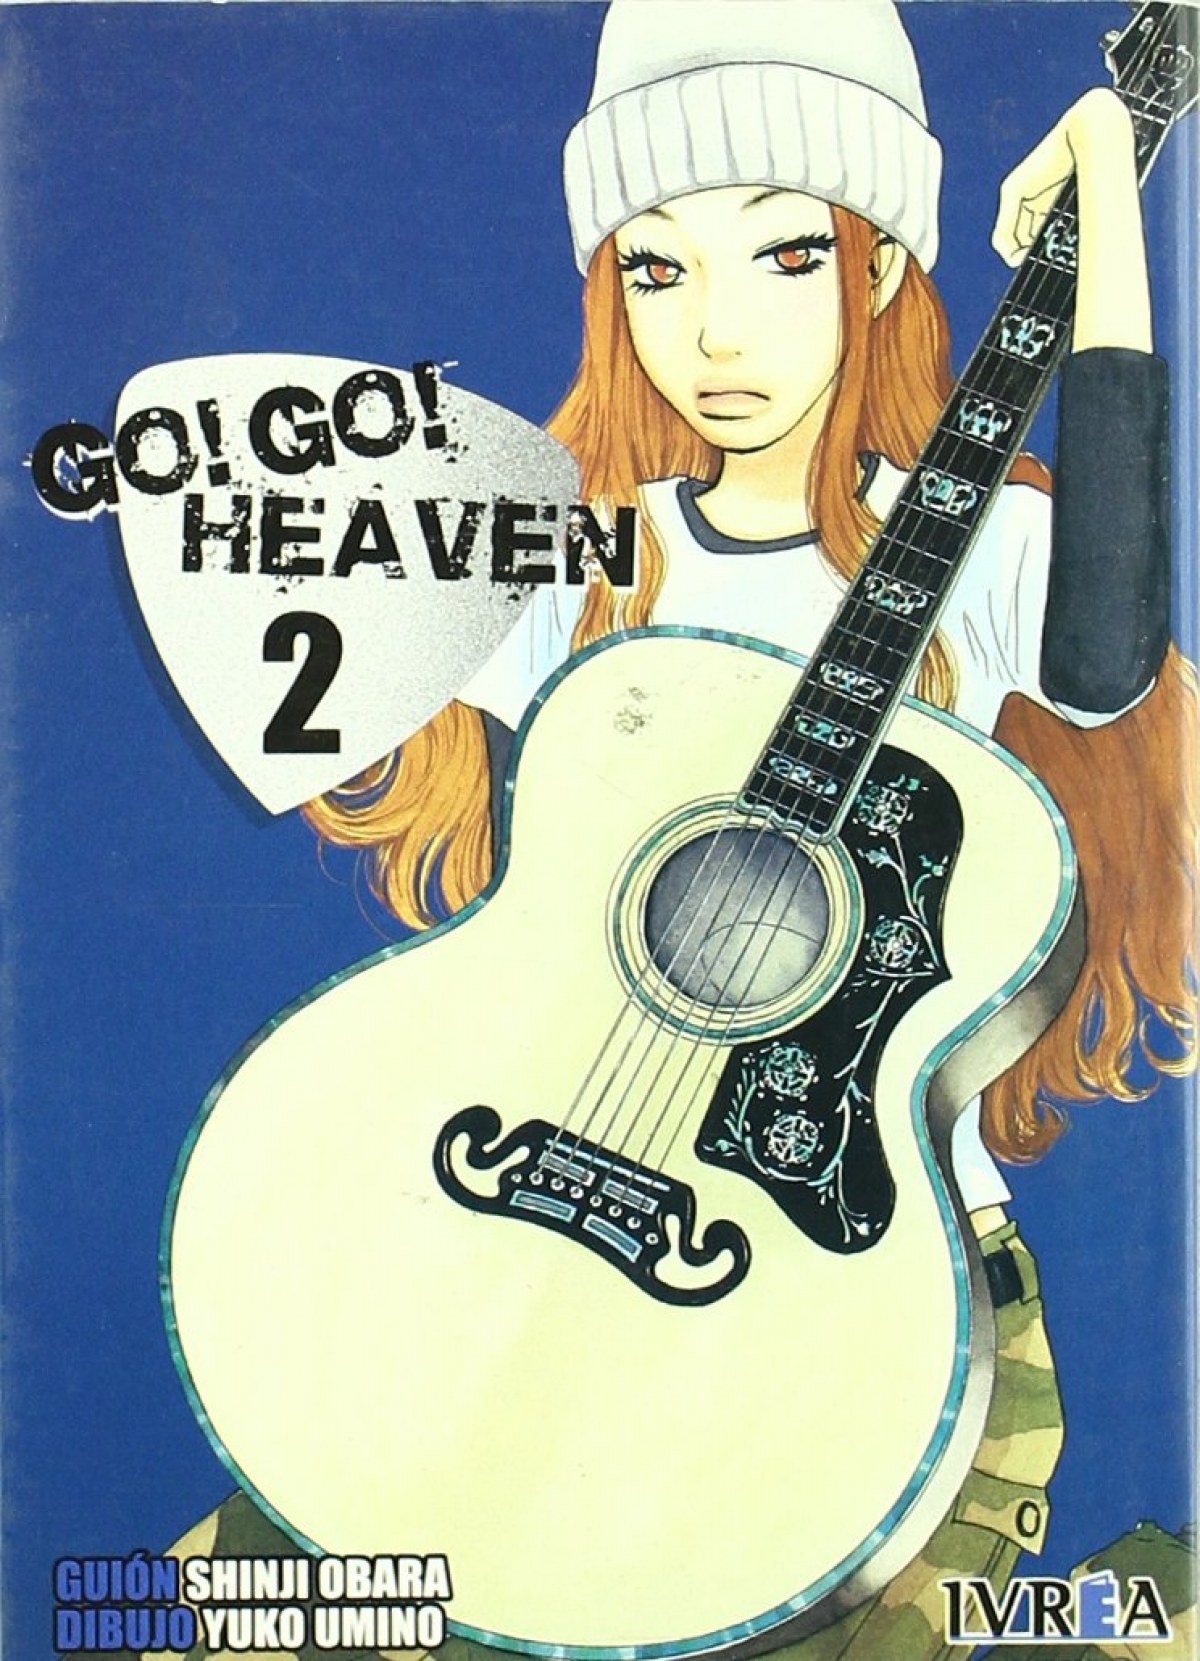 Go Go Heaven, 2 - Obara, Shinji